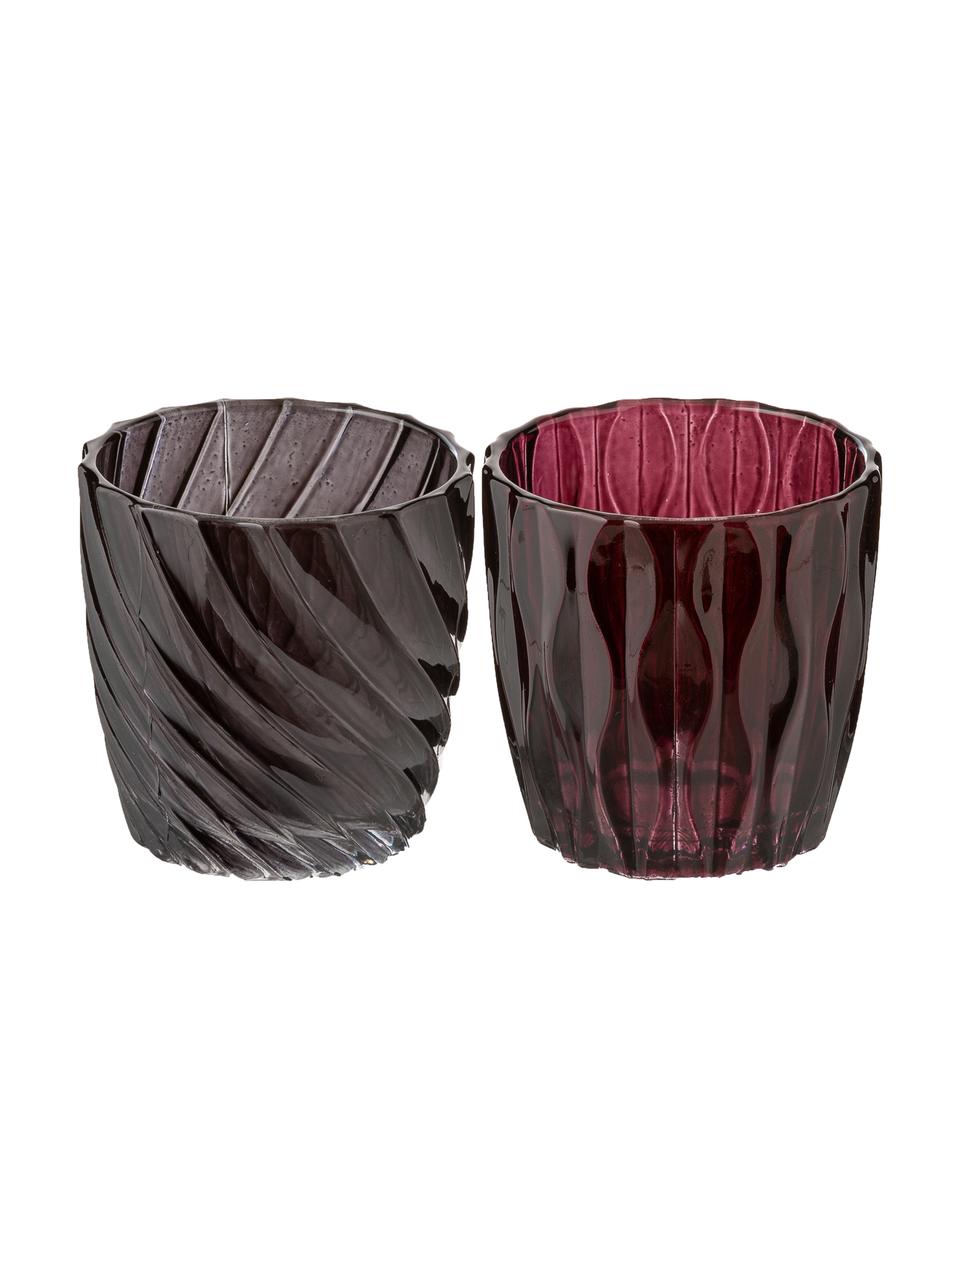 Teelichthalter-Set Jasmina, 2-tlg., Glas, lackiert, Rot, Braun, Je Ø 7 x H 7 cm